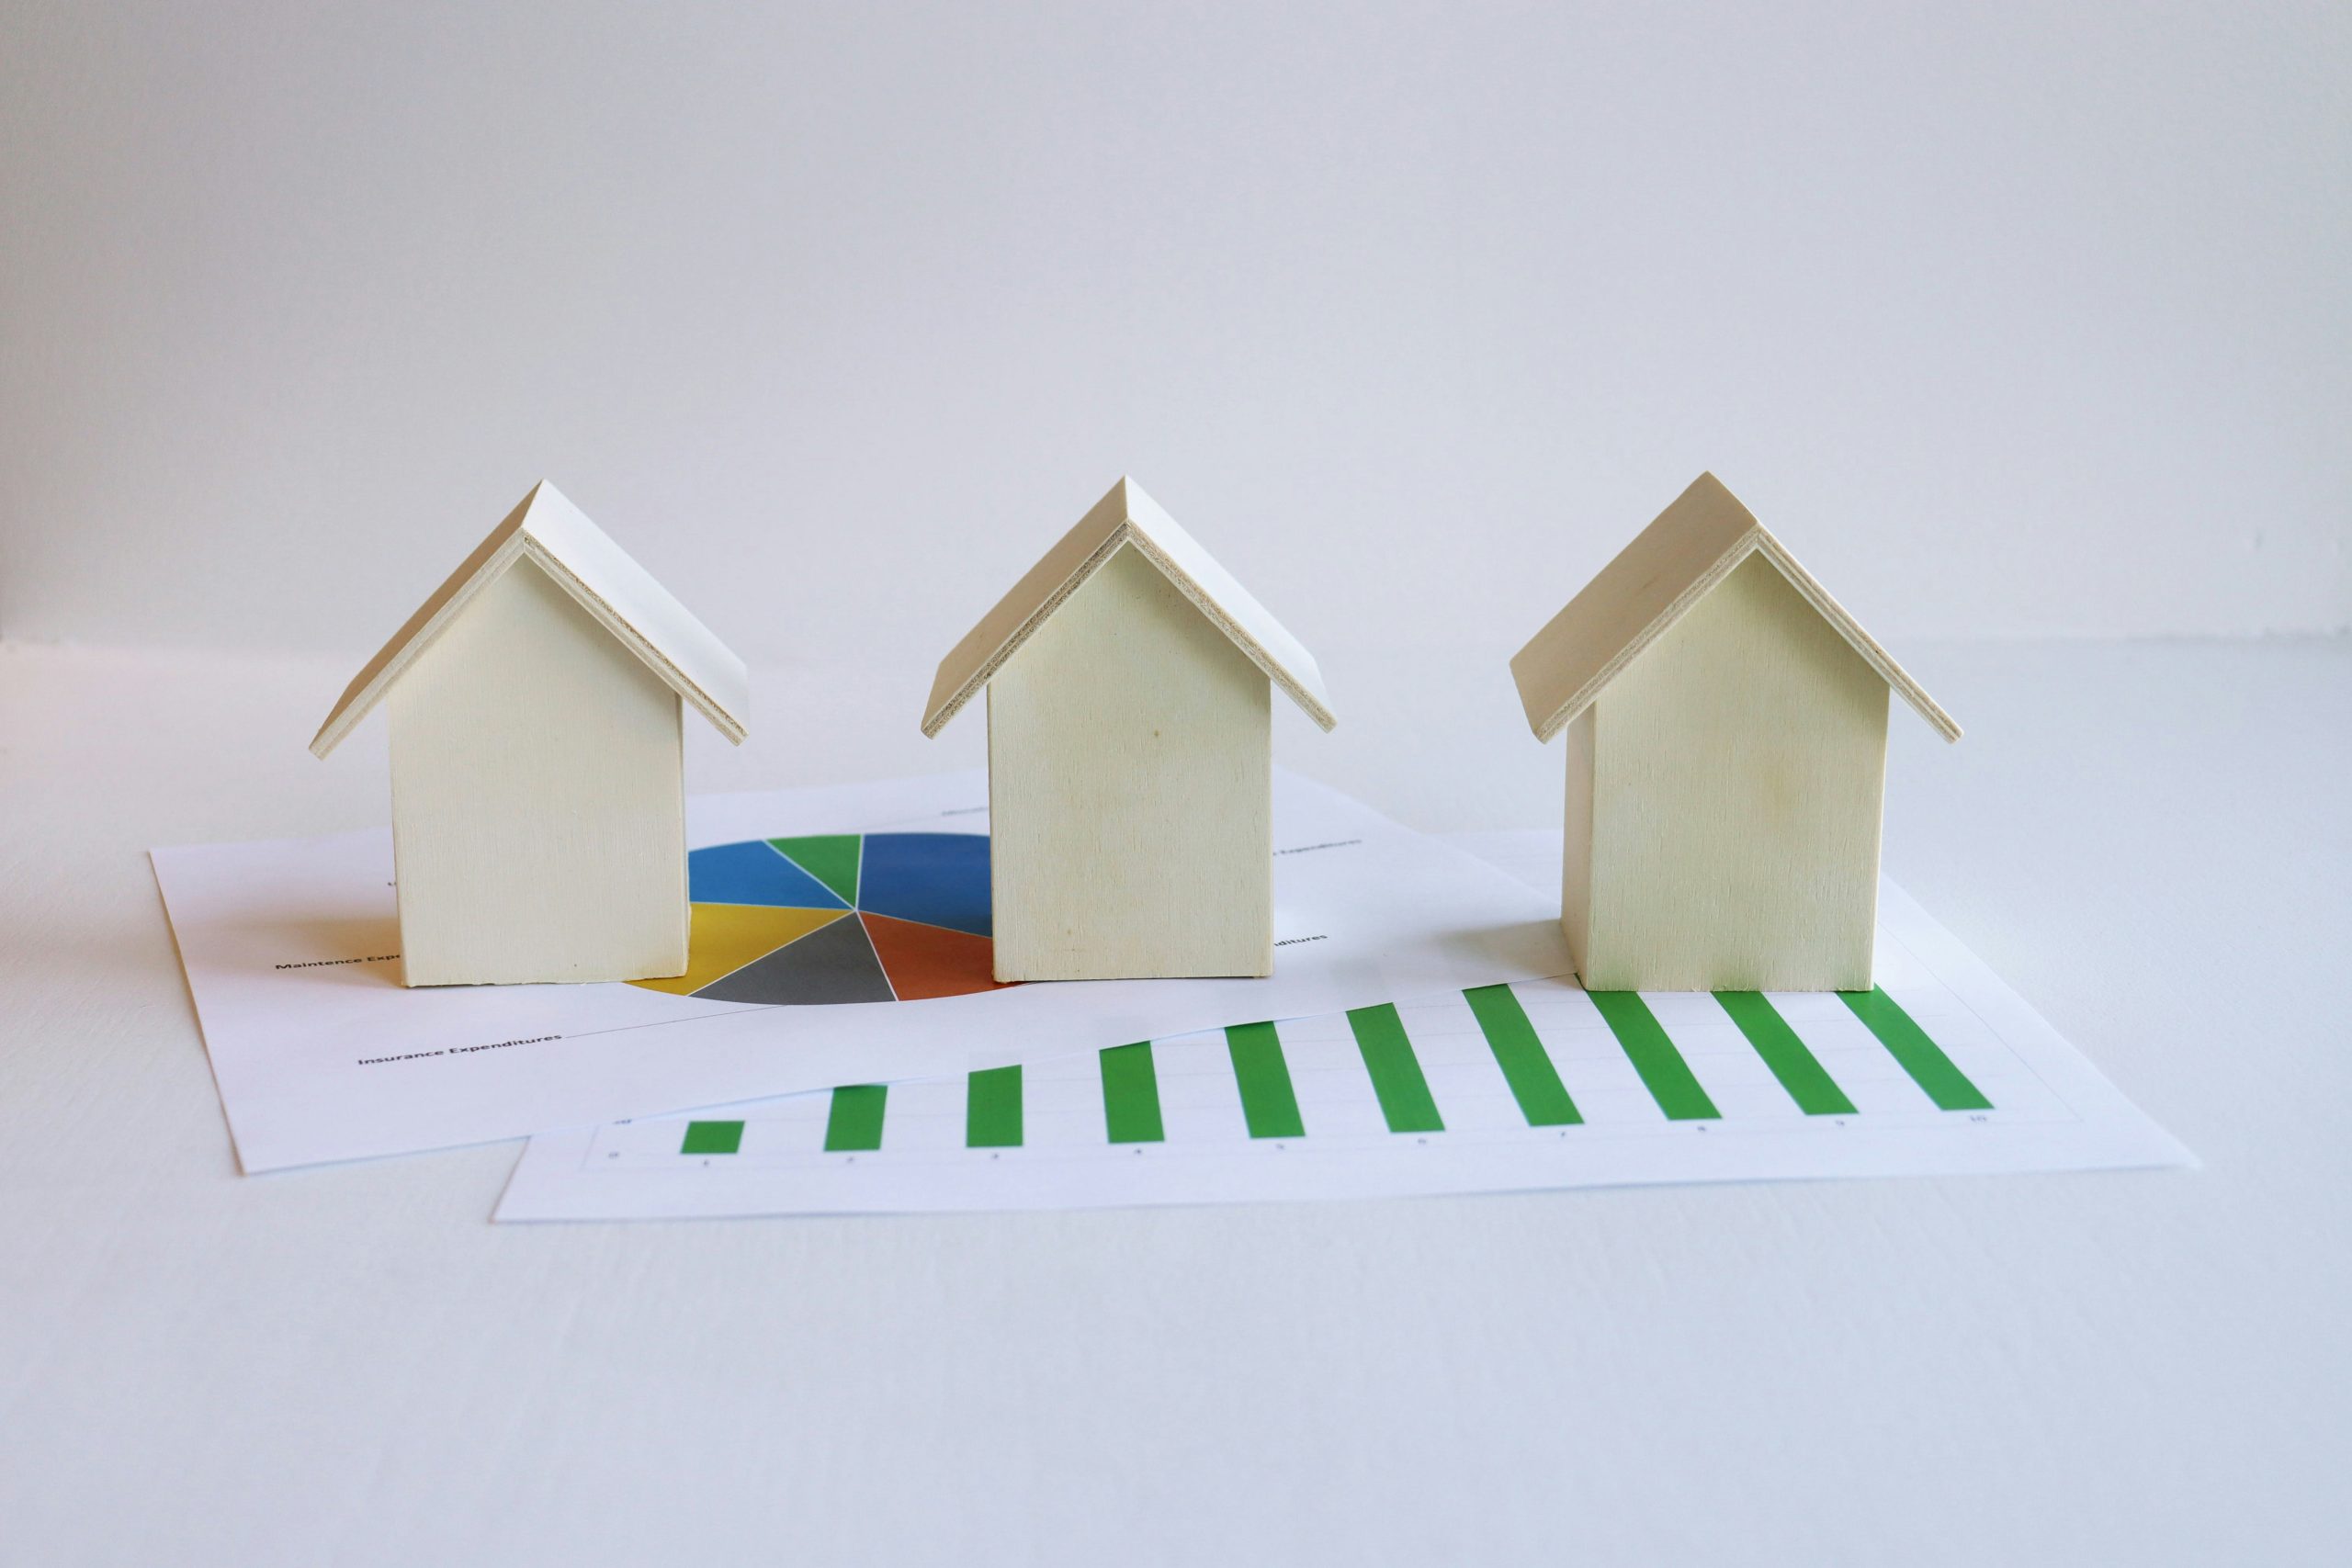 Tres maquetas en miniatura de casas sobre documentos con cálculos hipotecarios.